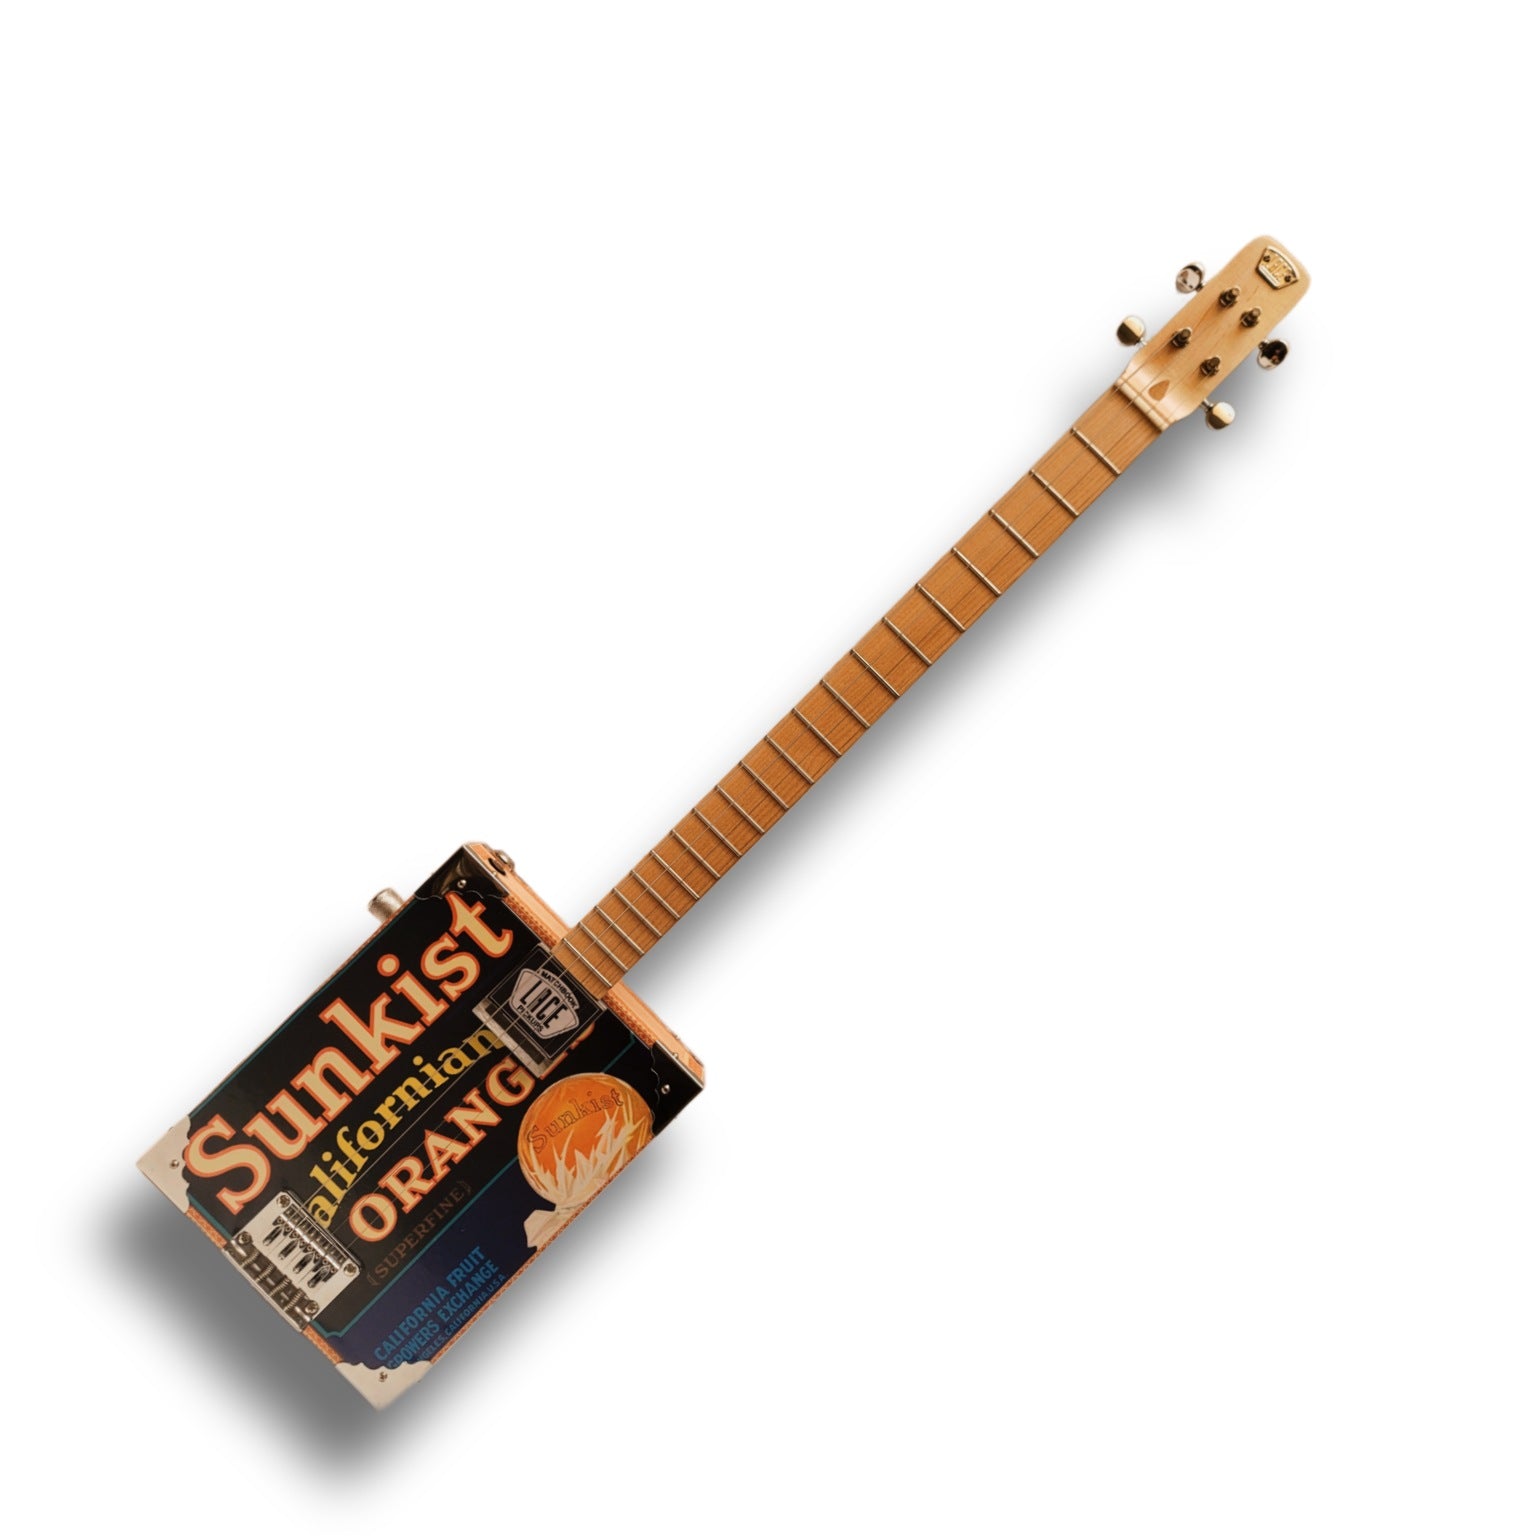 Sunkist Electric Cigar Box Guitar by Orange Crate (4 String